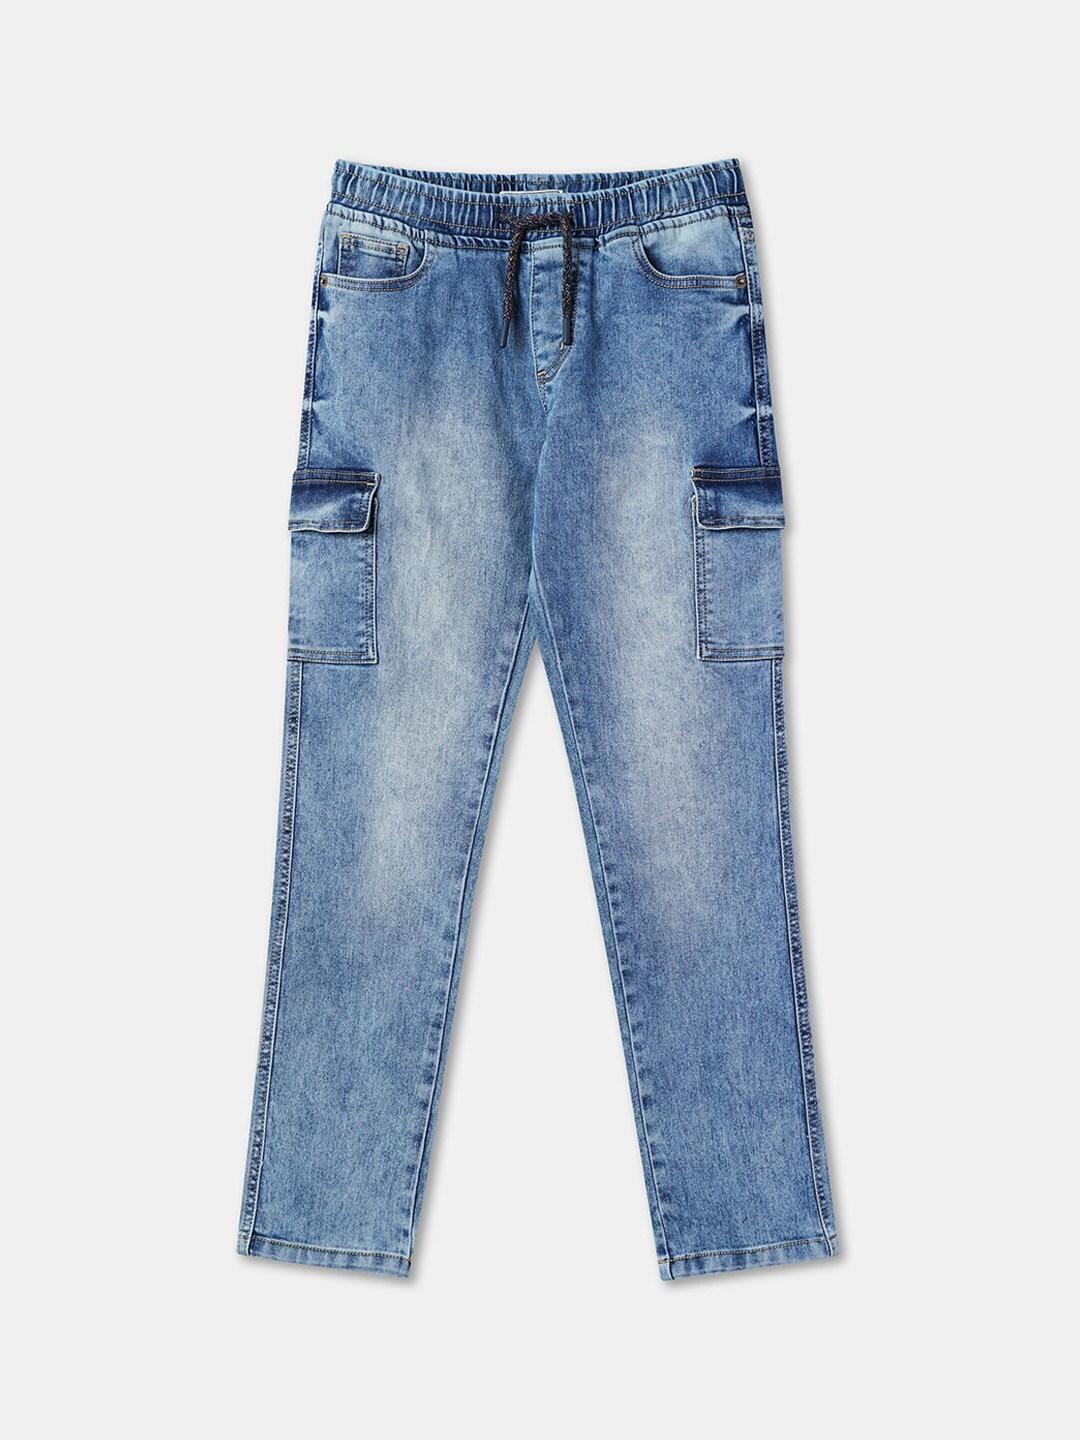 R&B Boys Clean Look Heavy Fade Cotton Jeans